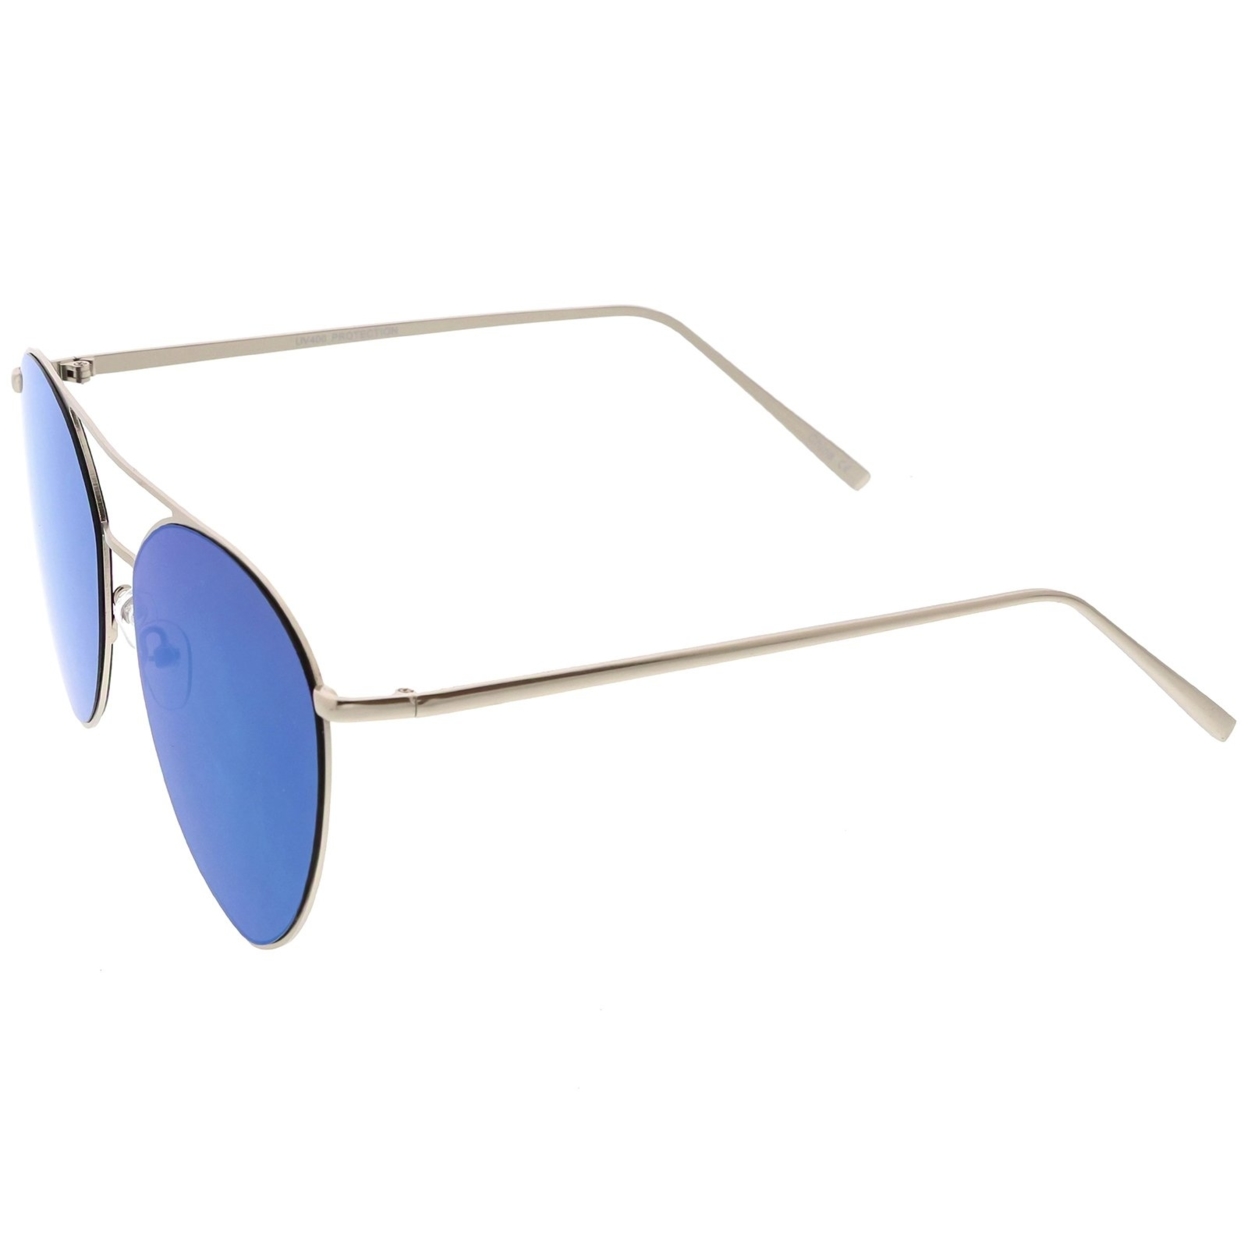 Oversize Thin Metal Aviator Sunglasses Double Crossbar Mirrored Flat Lens 62mm - Gunmetal / Purple Mirror